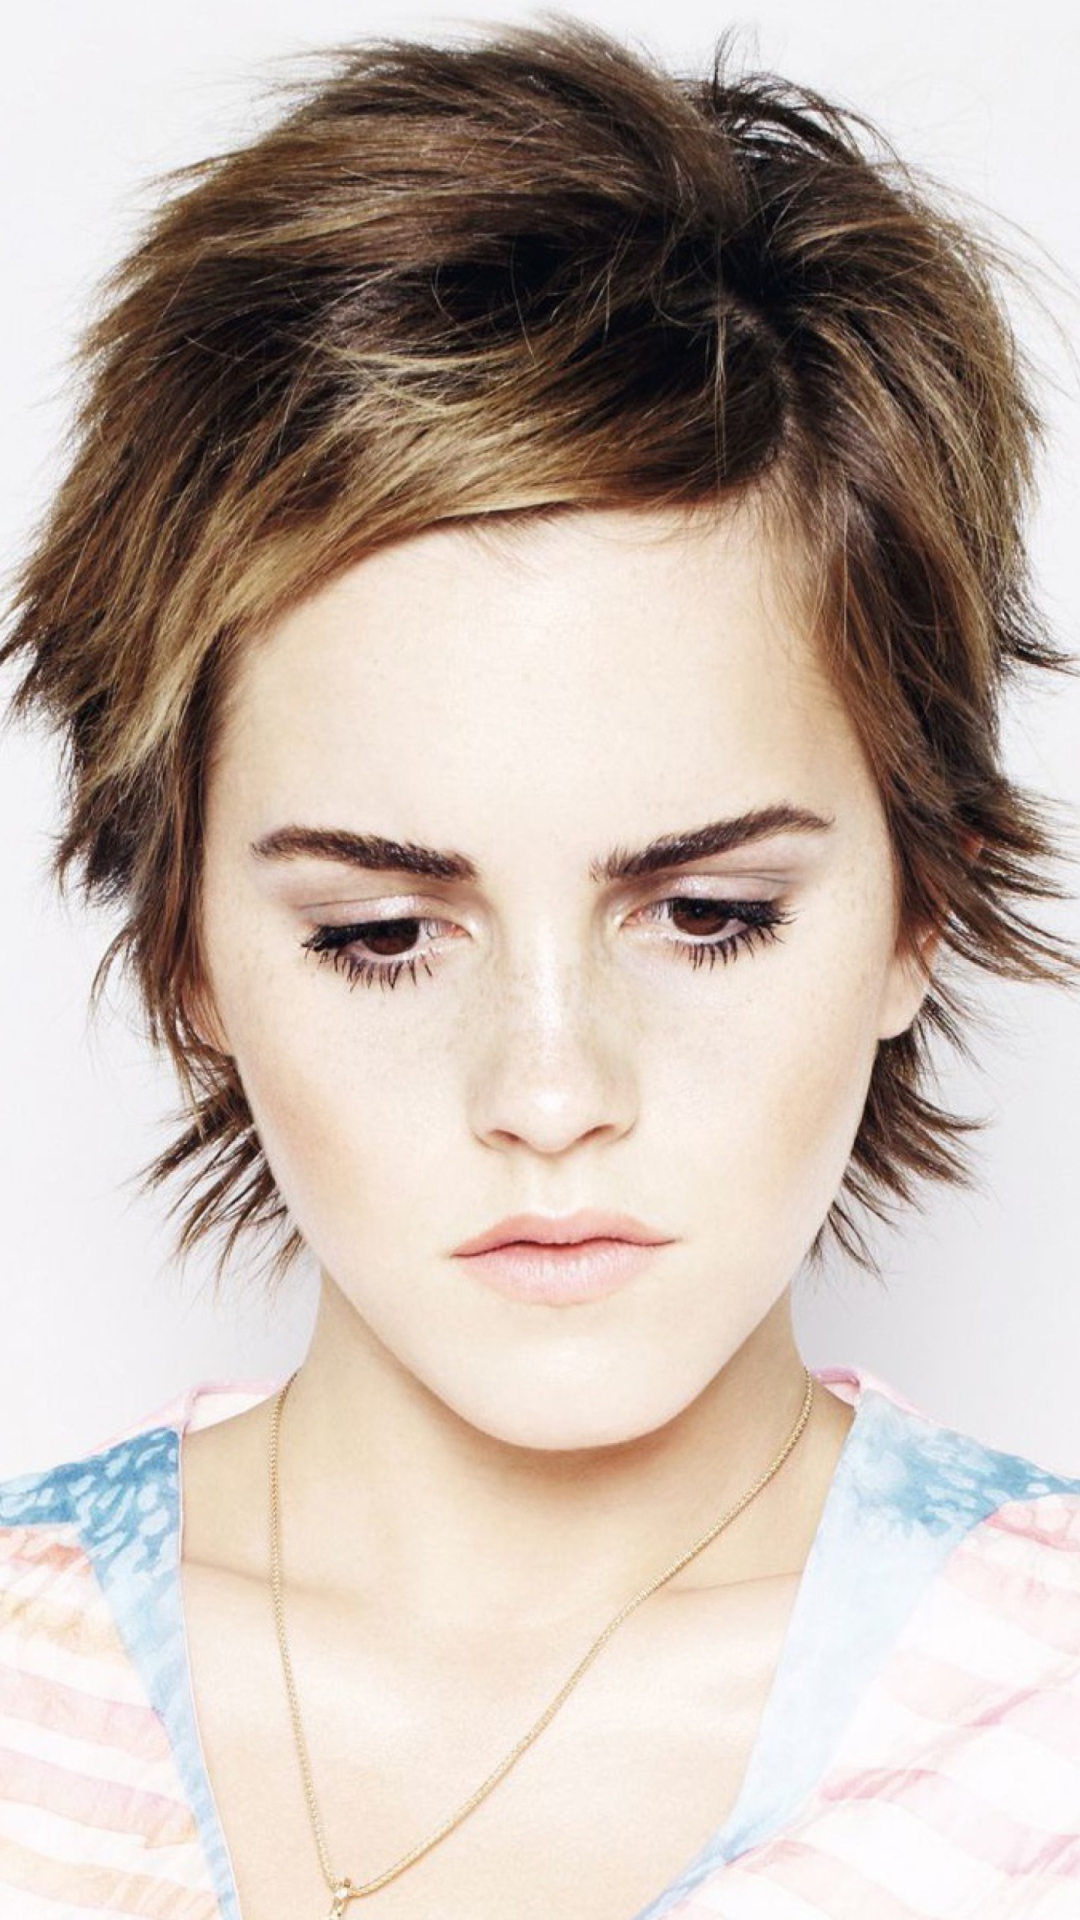 Das Emma Watson Wallpaper 1080x1920